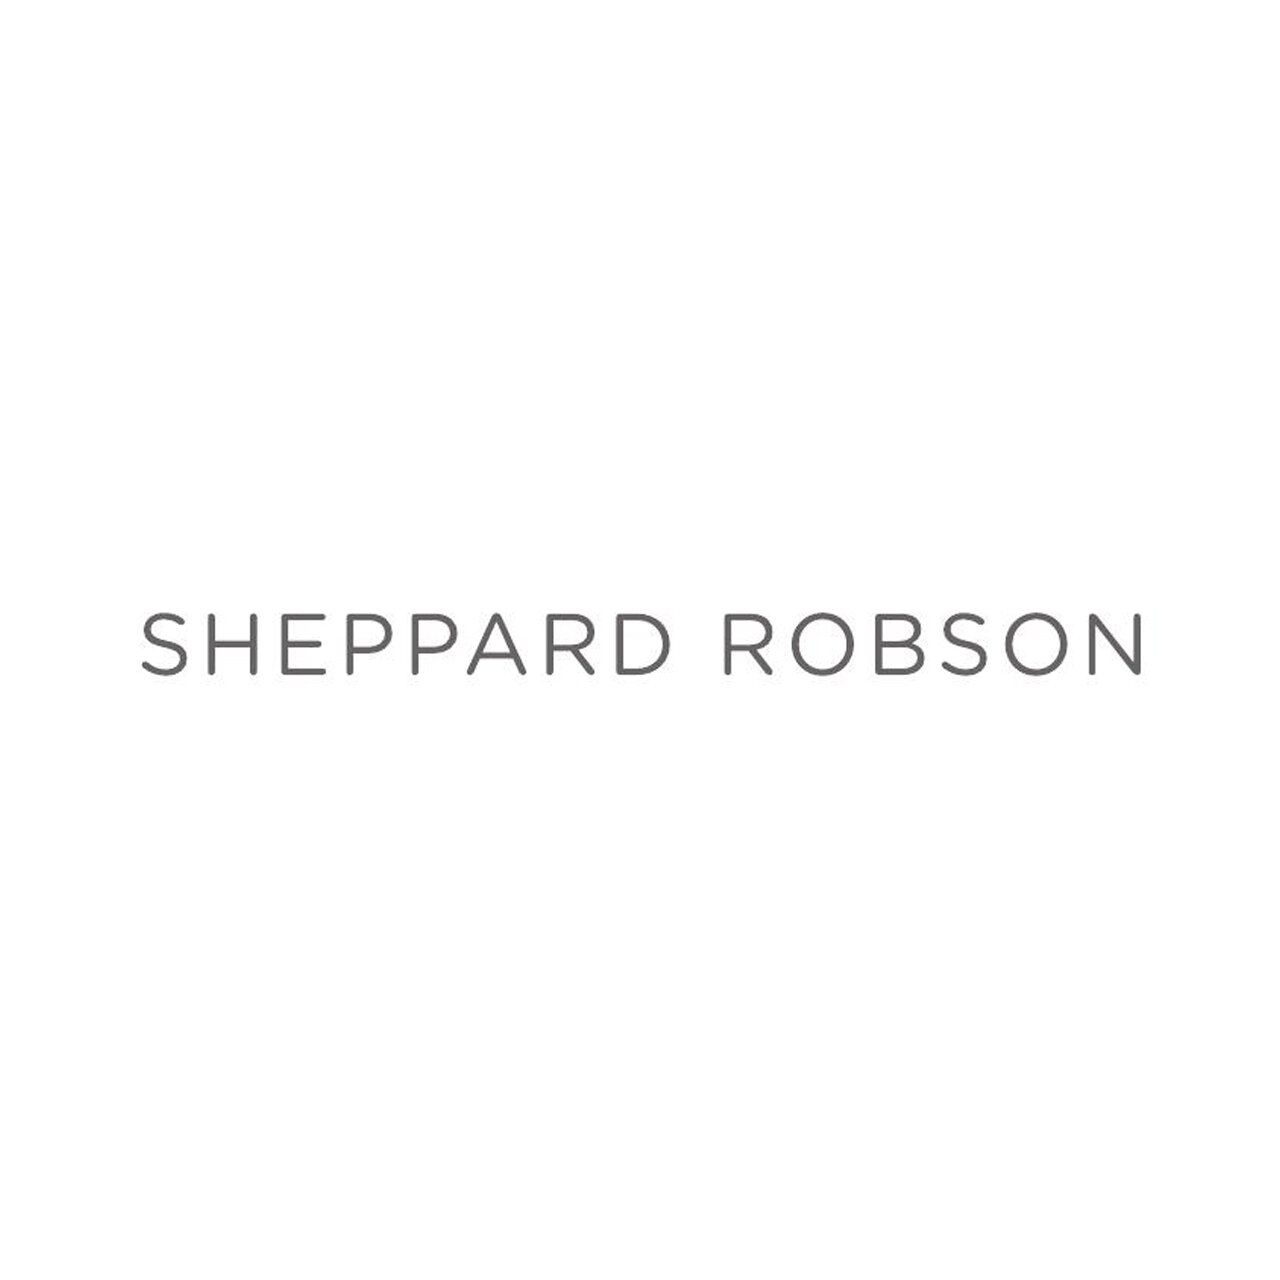 Sheppard Robson.jpg